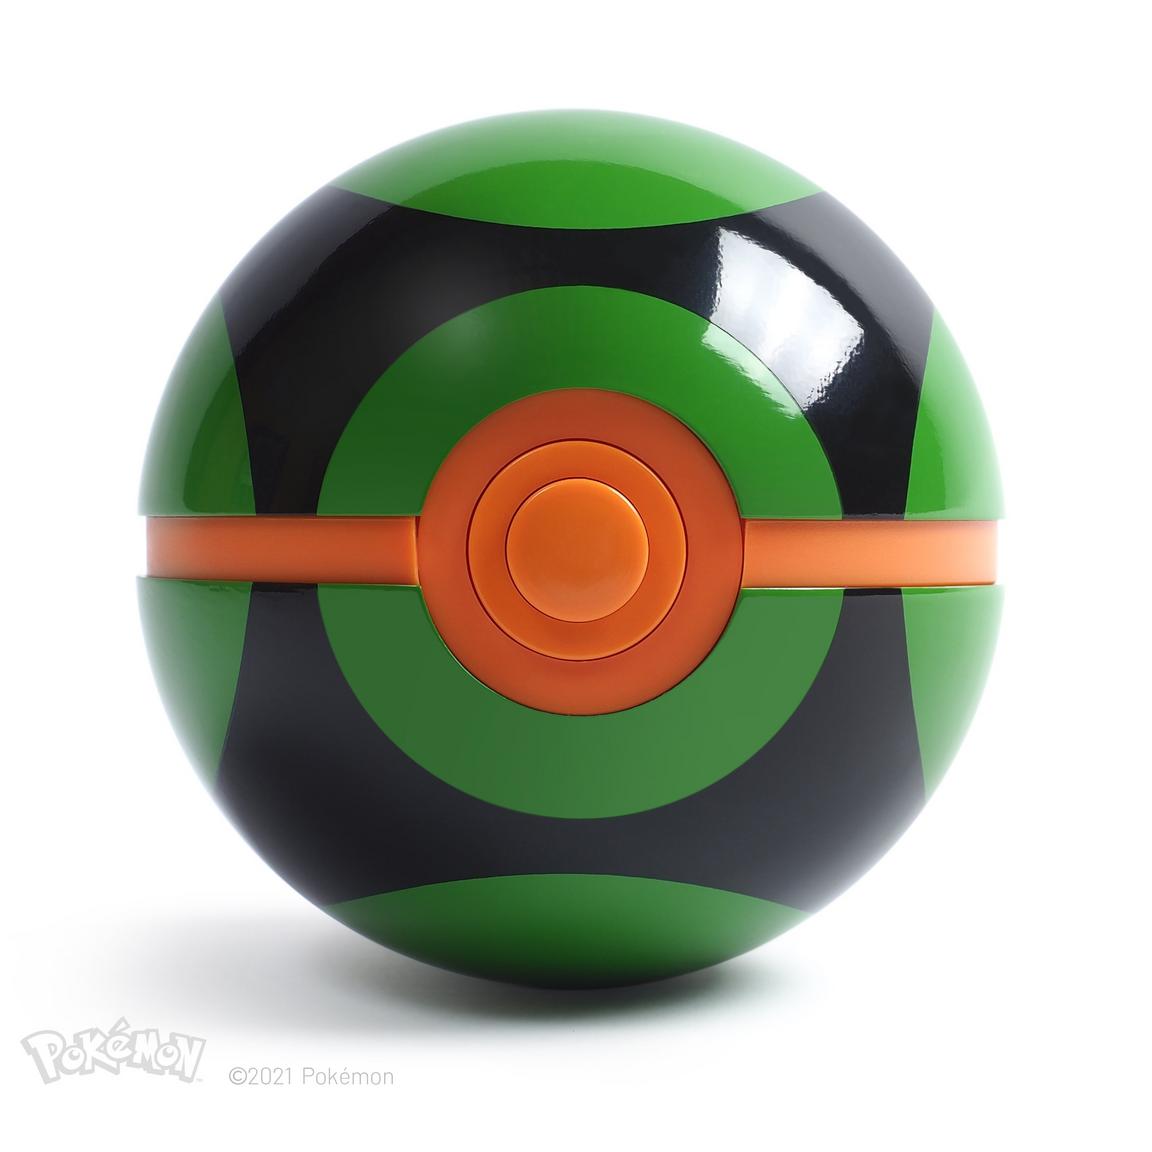 Official Pokémon© Die-Cast Collectible Dusk Ball Replica